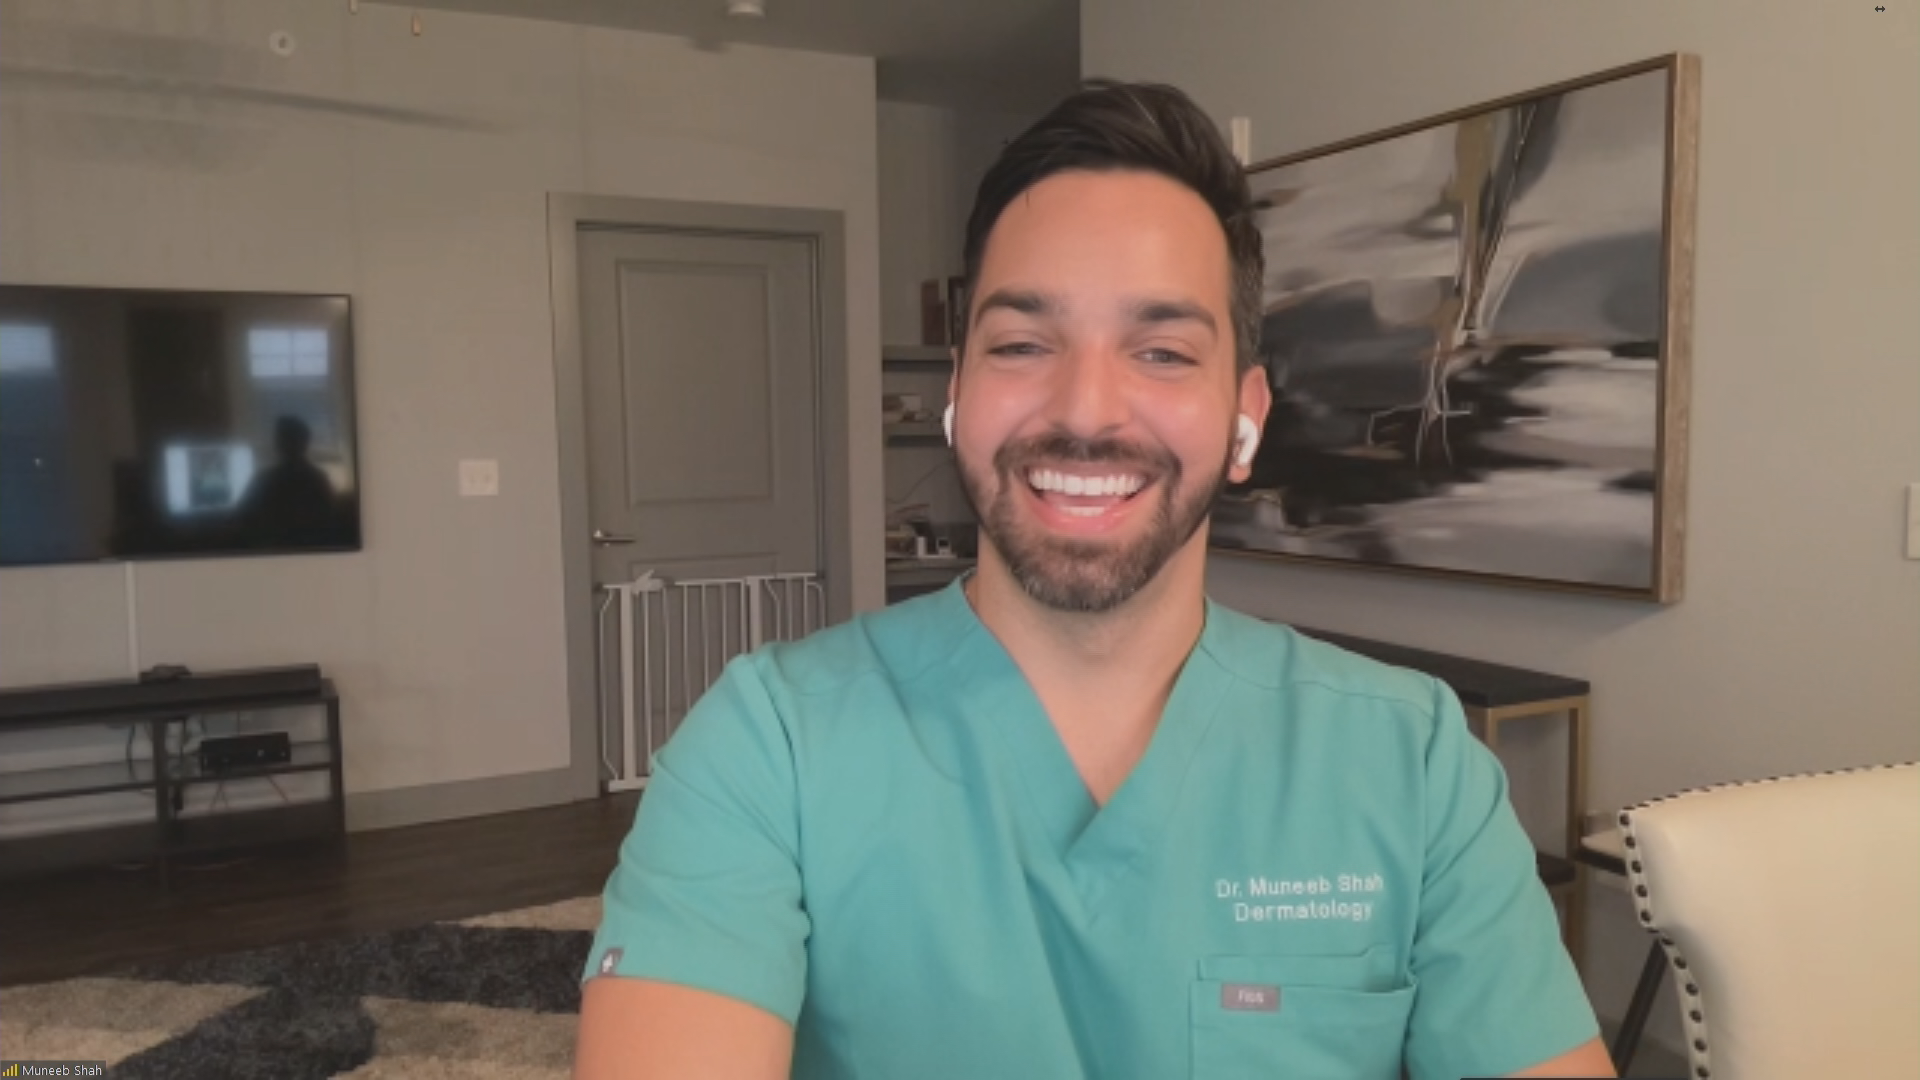 Breeze Doctors Sex Videos - Dr. Muneeb Shah: How the @DermDoctor became a social media superstar (â€œ1on1  with Jon Evansâ€ podcast)